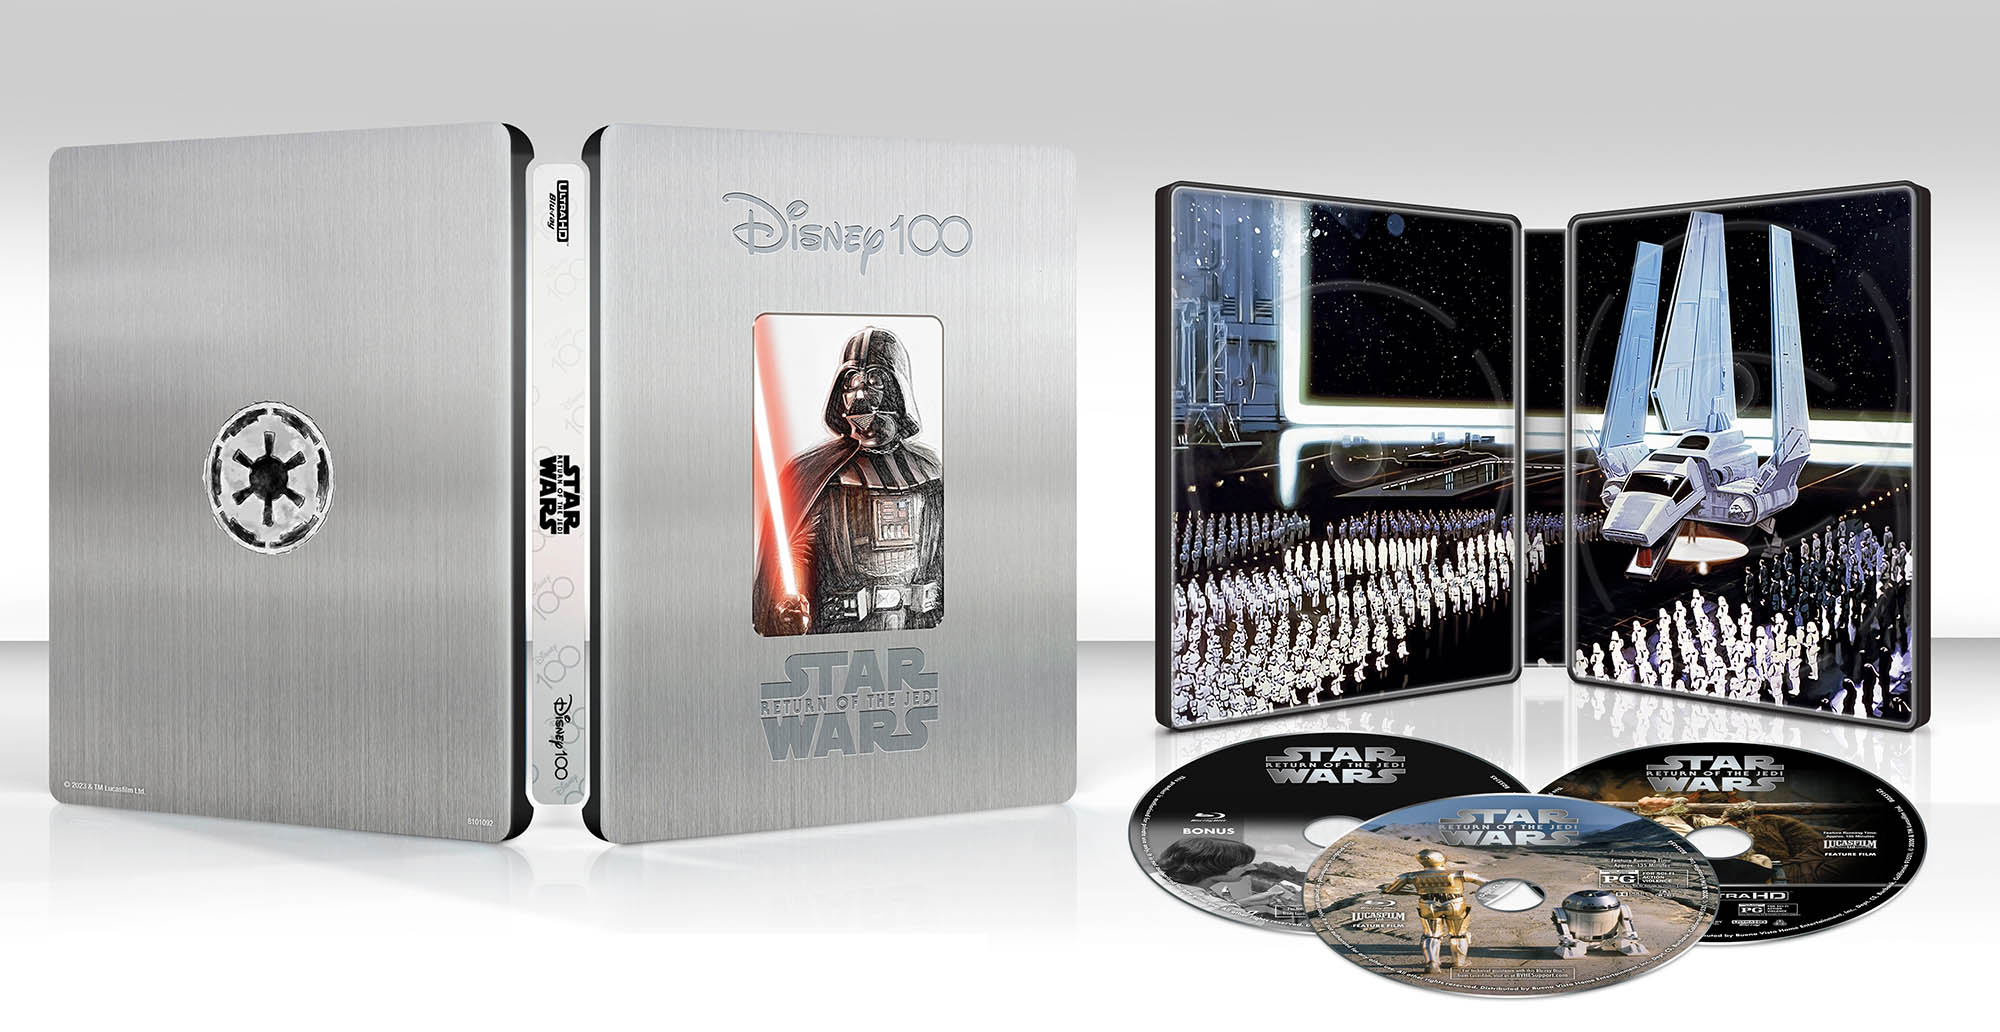 Star Wars: Return of the Jedi (1983) 4k Blu-ray SteelBook Edition 